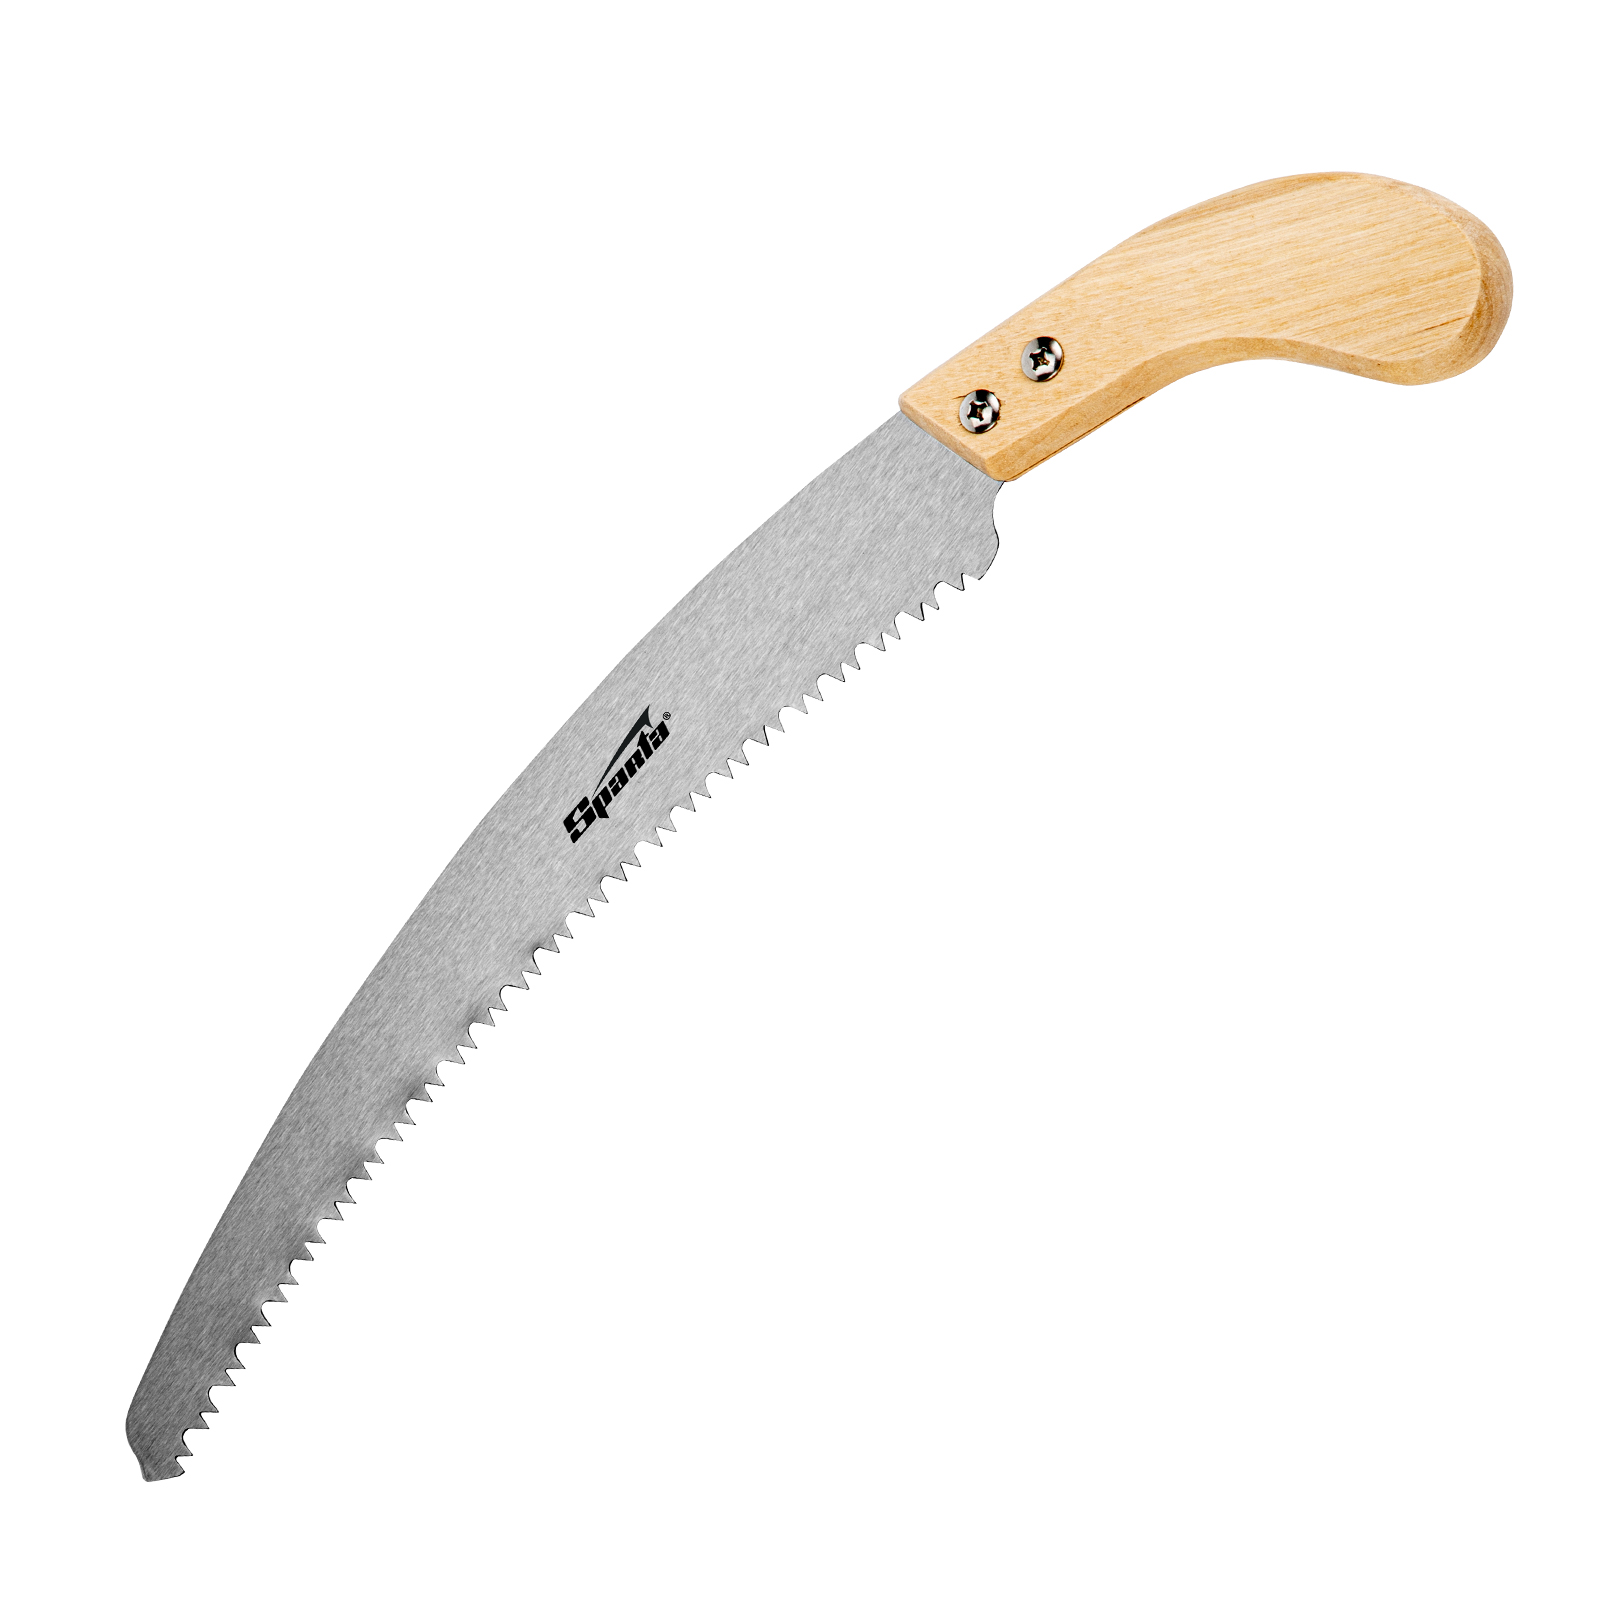 Садовая ножовка SPARTA 230335 ножовка садовая 300 мм деревянная ручка